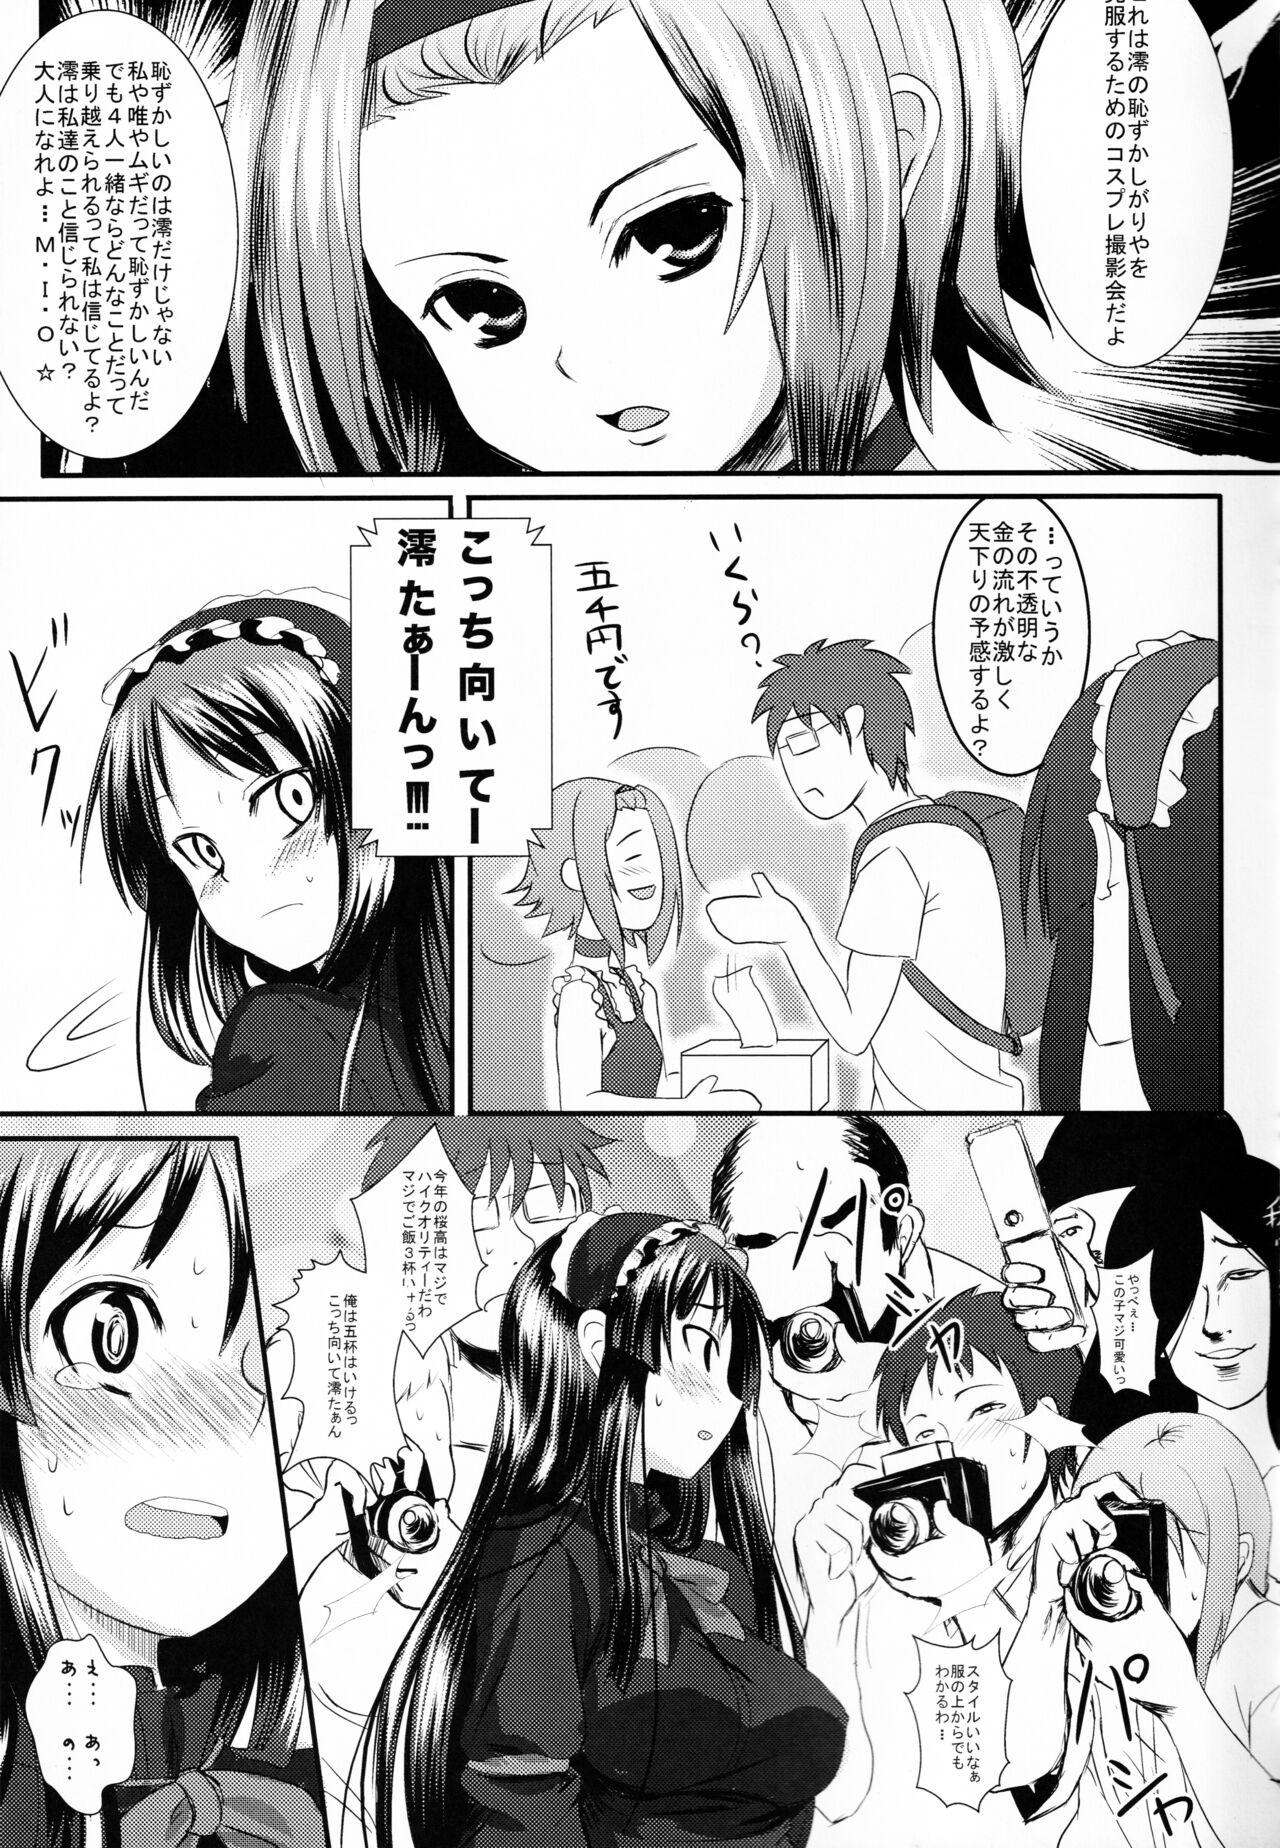 Office KKK - K on Futanari - Page 4